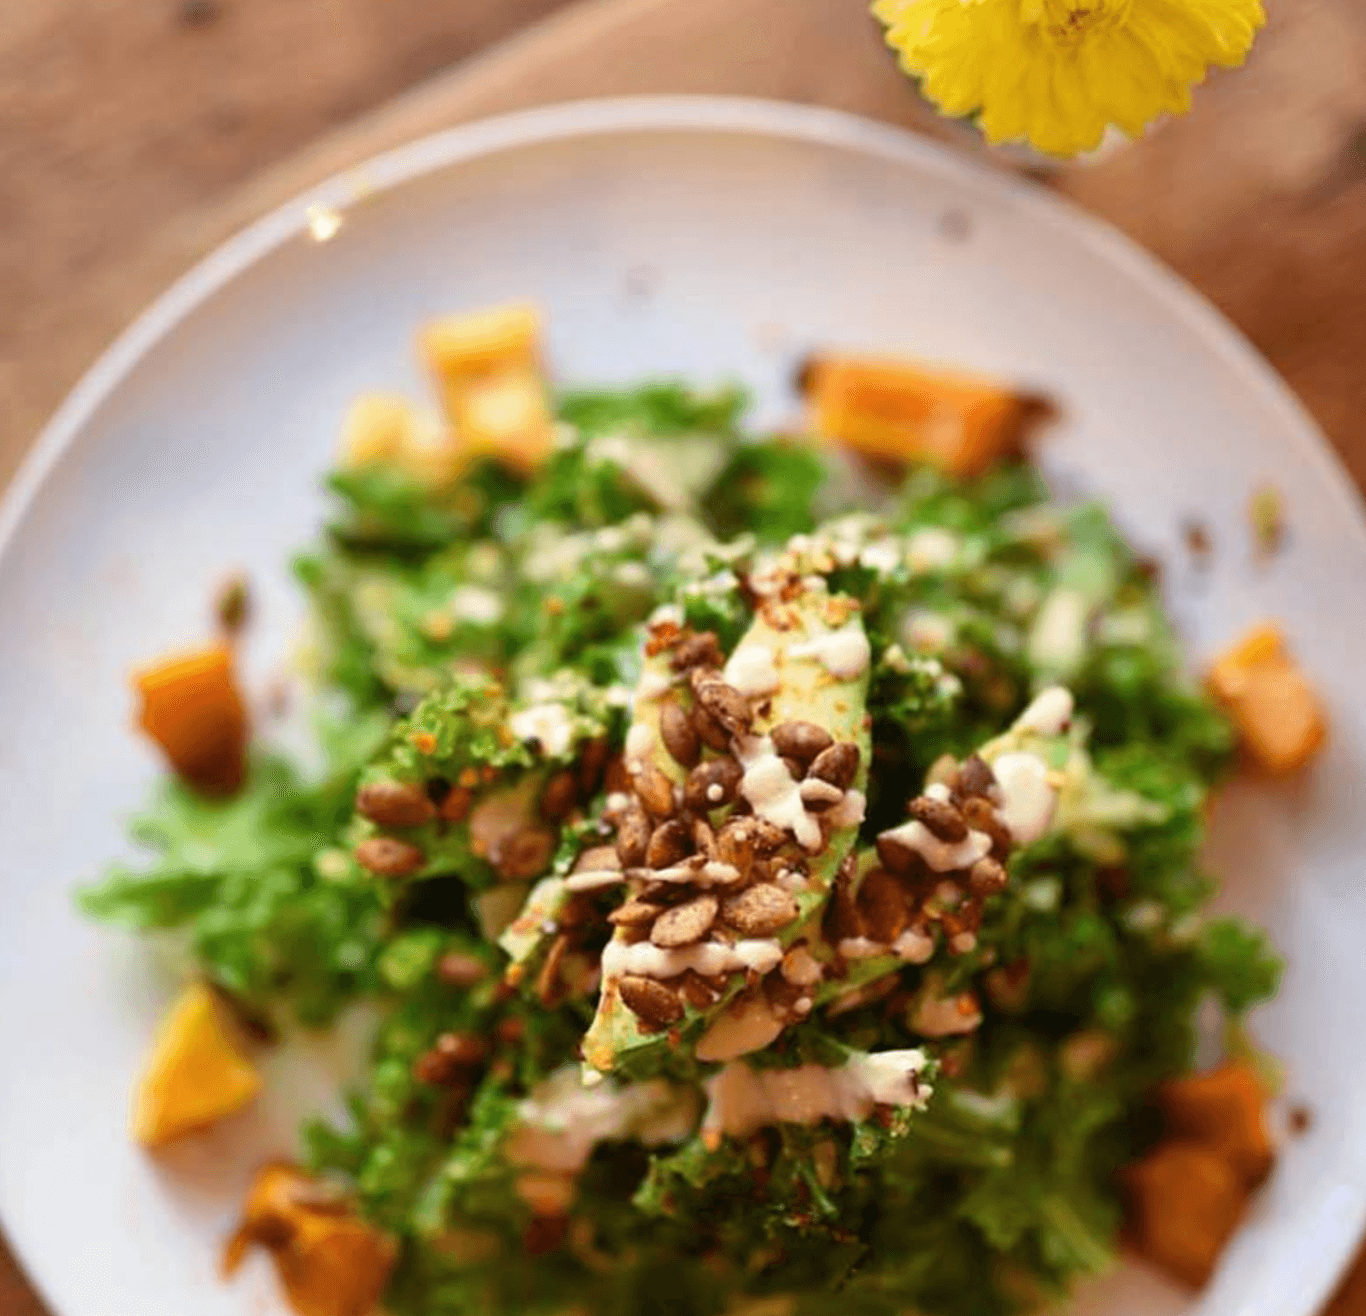 Dining-3-Vegan-Restaurants-Sun-In-Bloom-Salad-by-Kim-Julie-Hansen